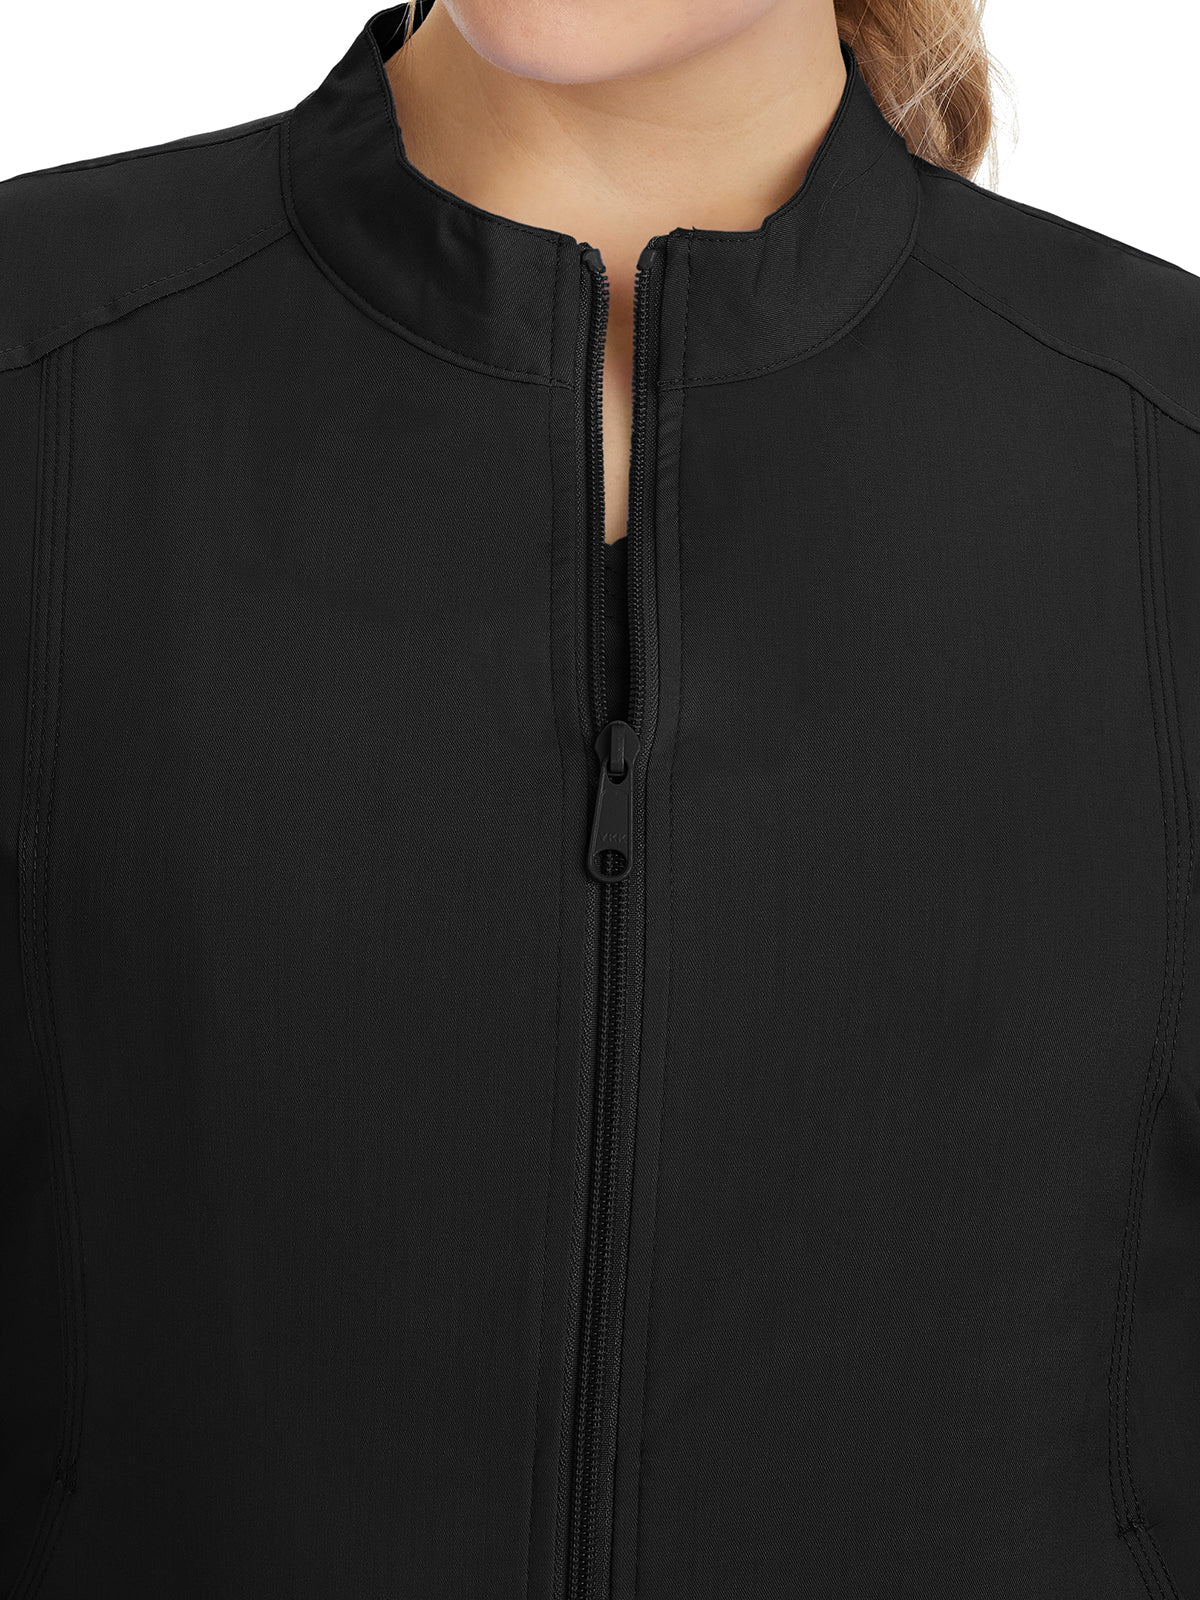 Women's Mandarin Collar Scrub Jacket